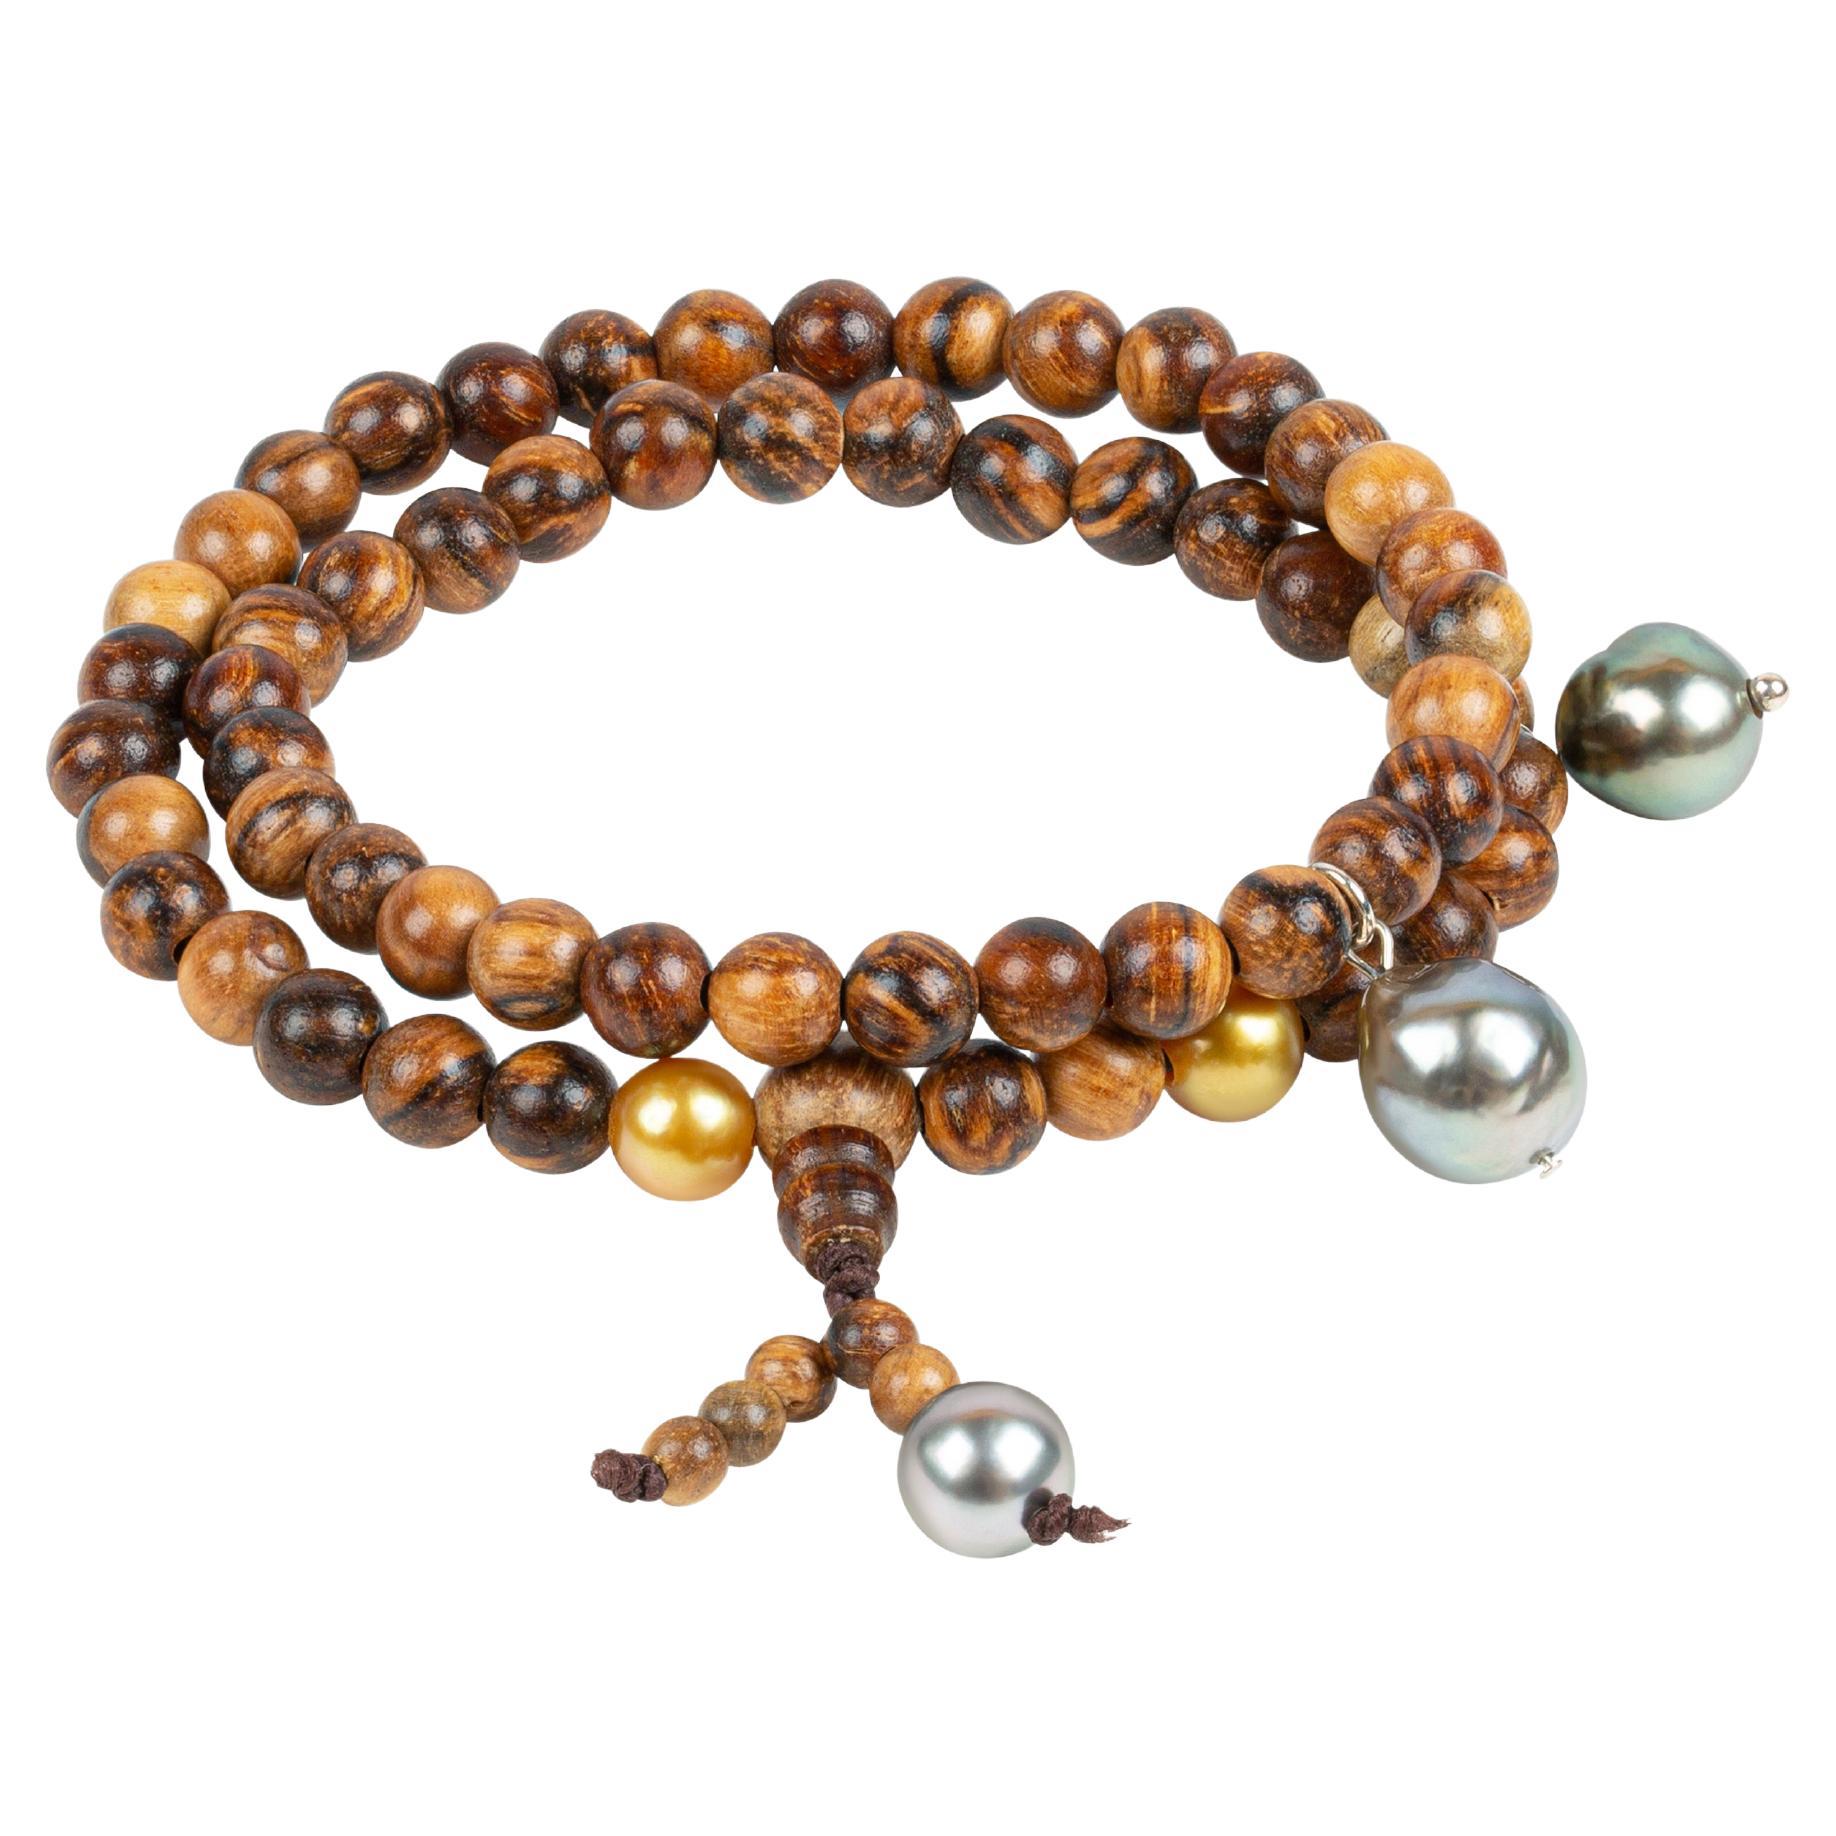 Prayer bracelet with sandalwood beads, Golden South Sea and Tahiti pearls